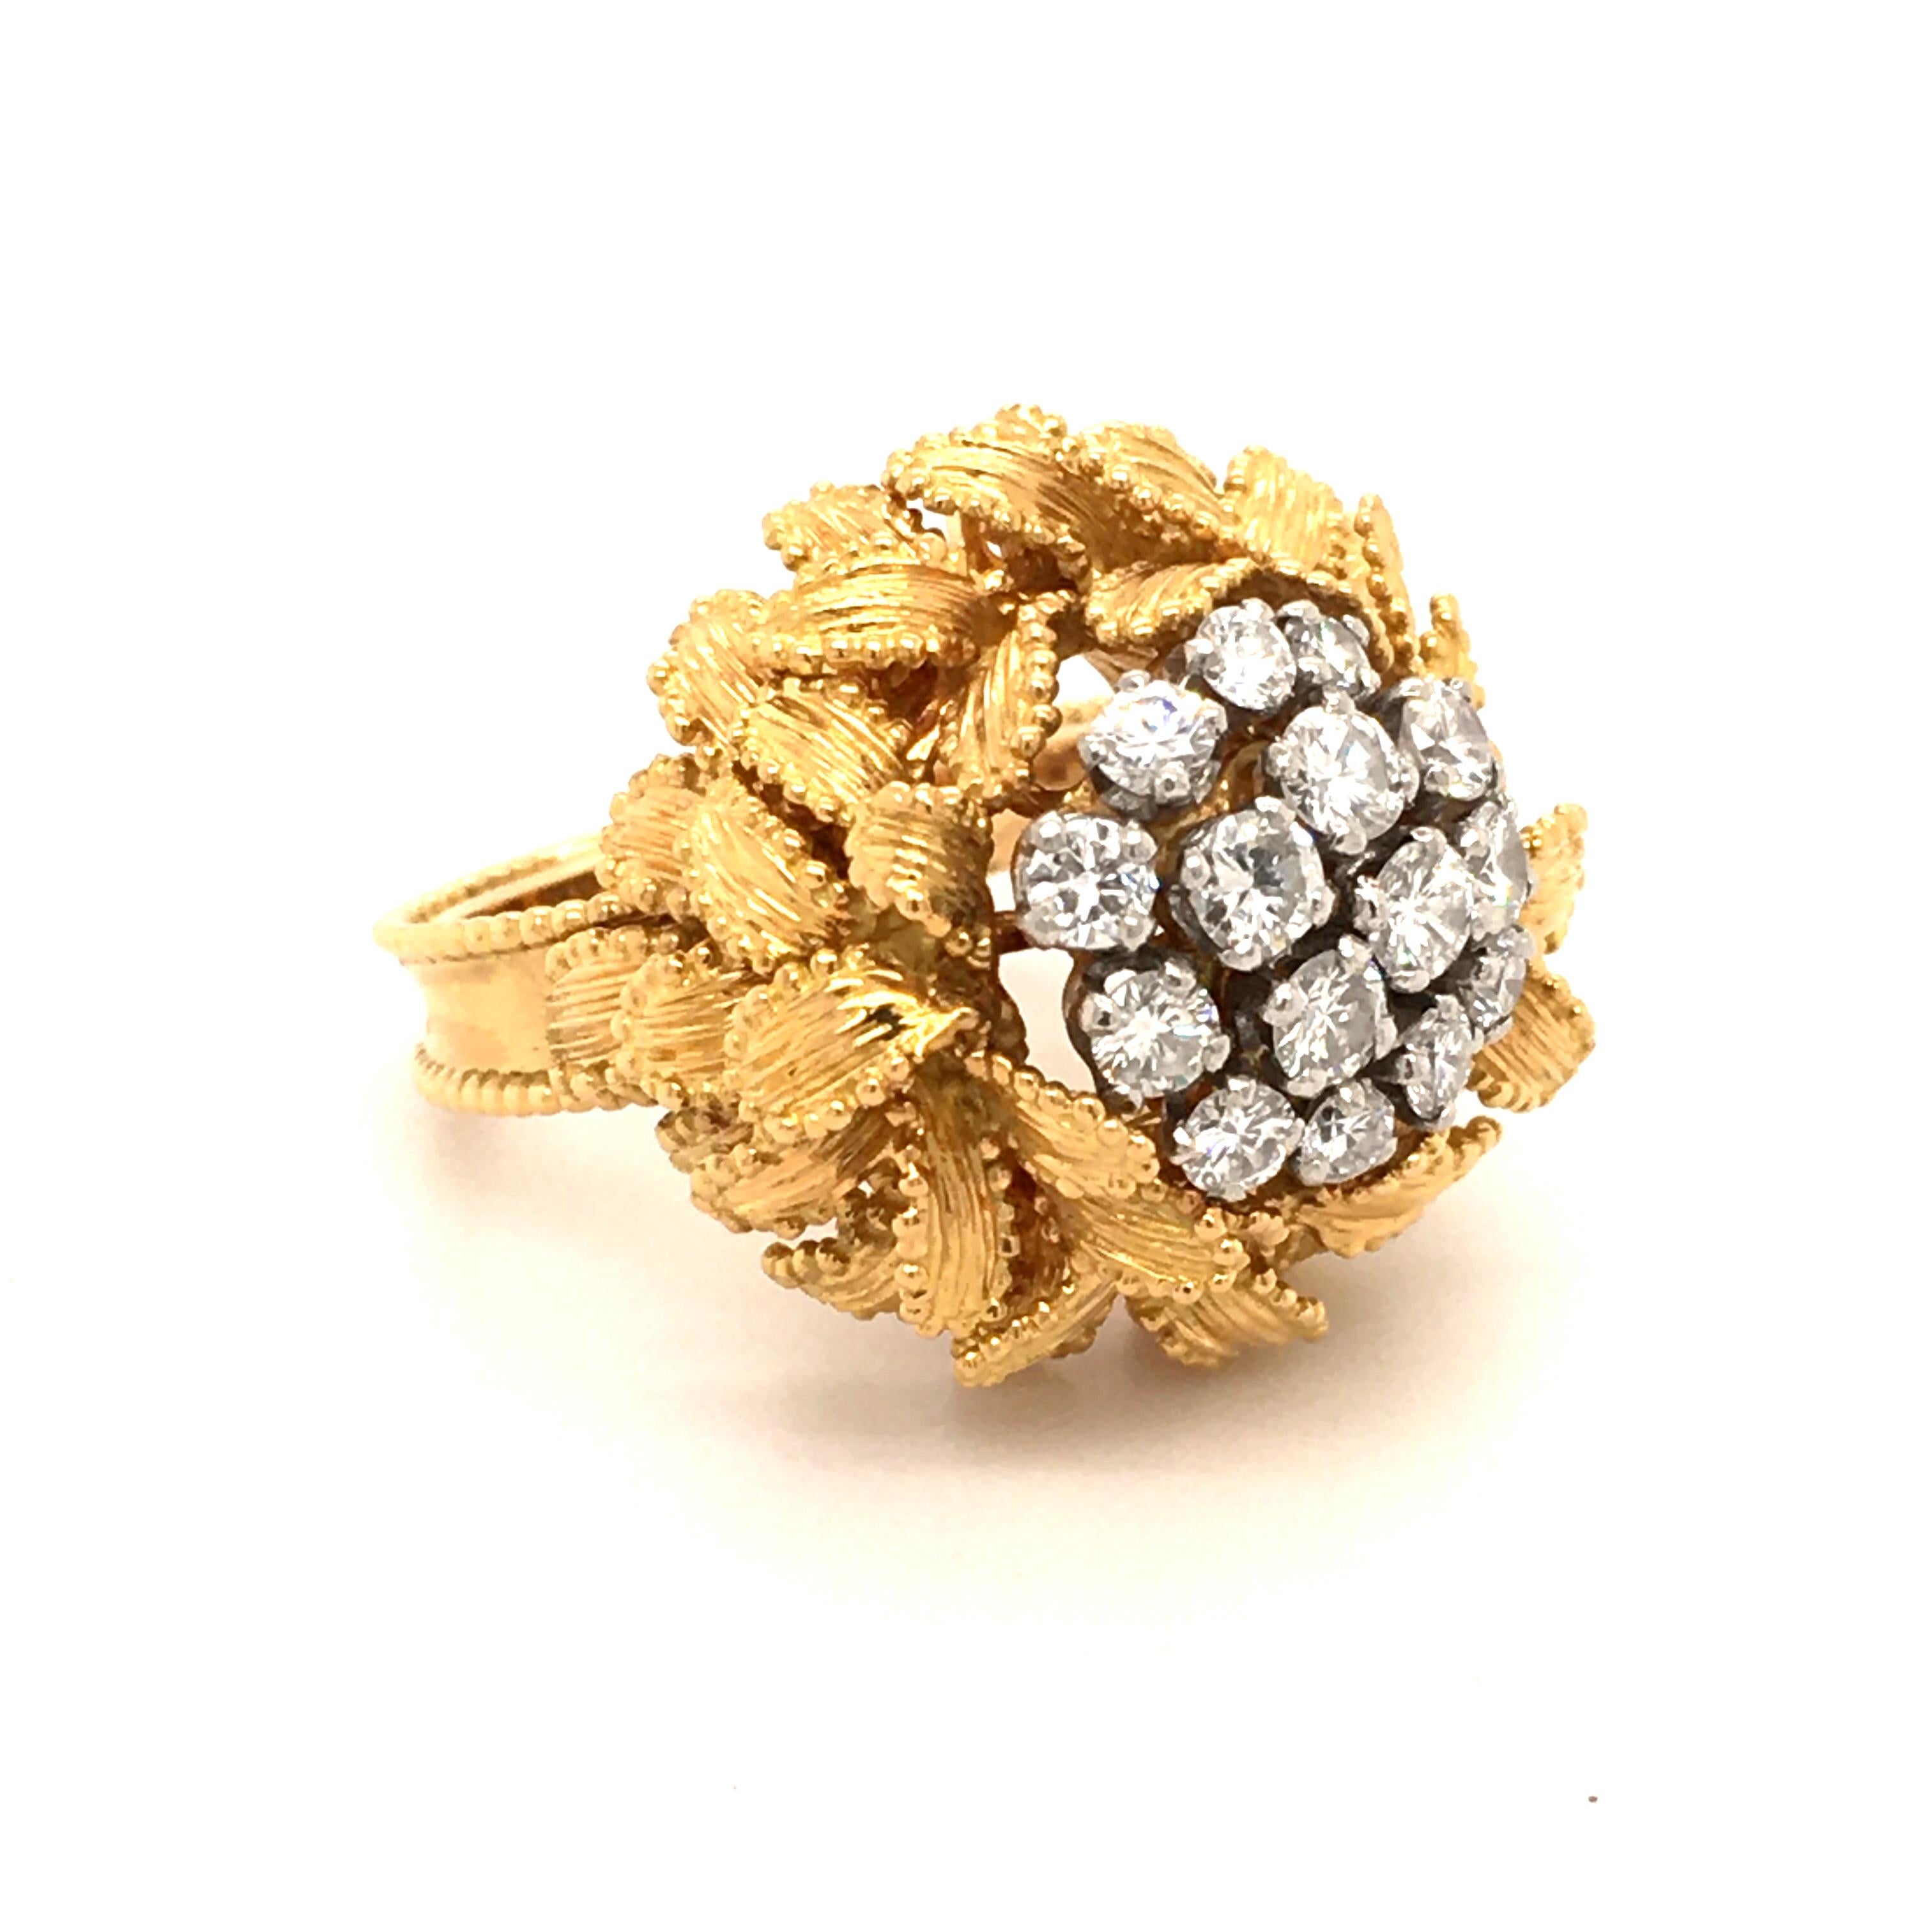 Round Cut Gubelin Diamond Ring in 18 Karat Yellow and White Gold